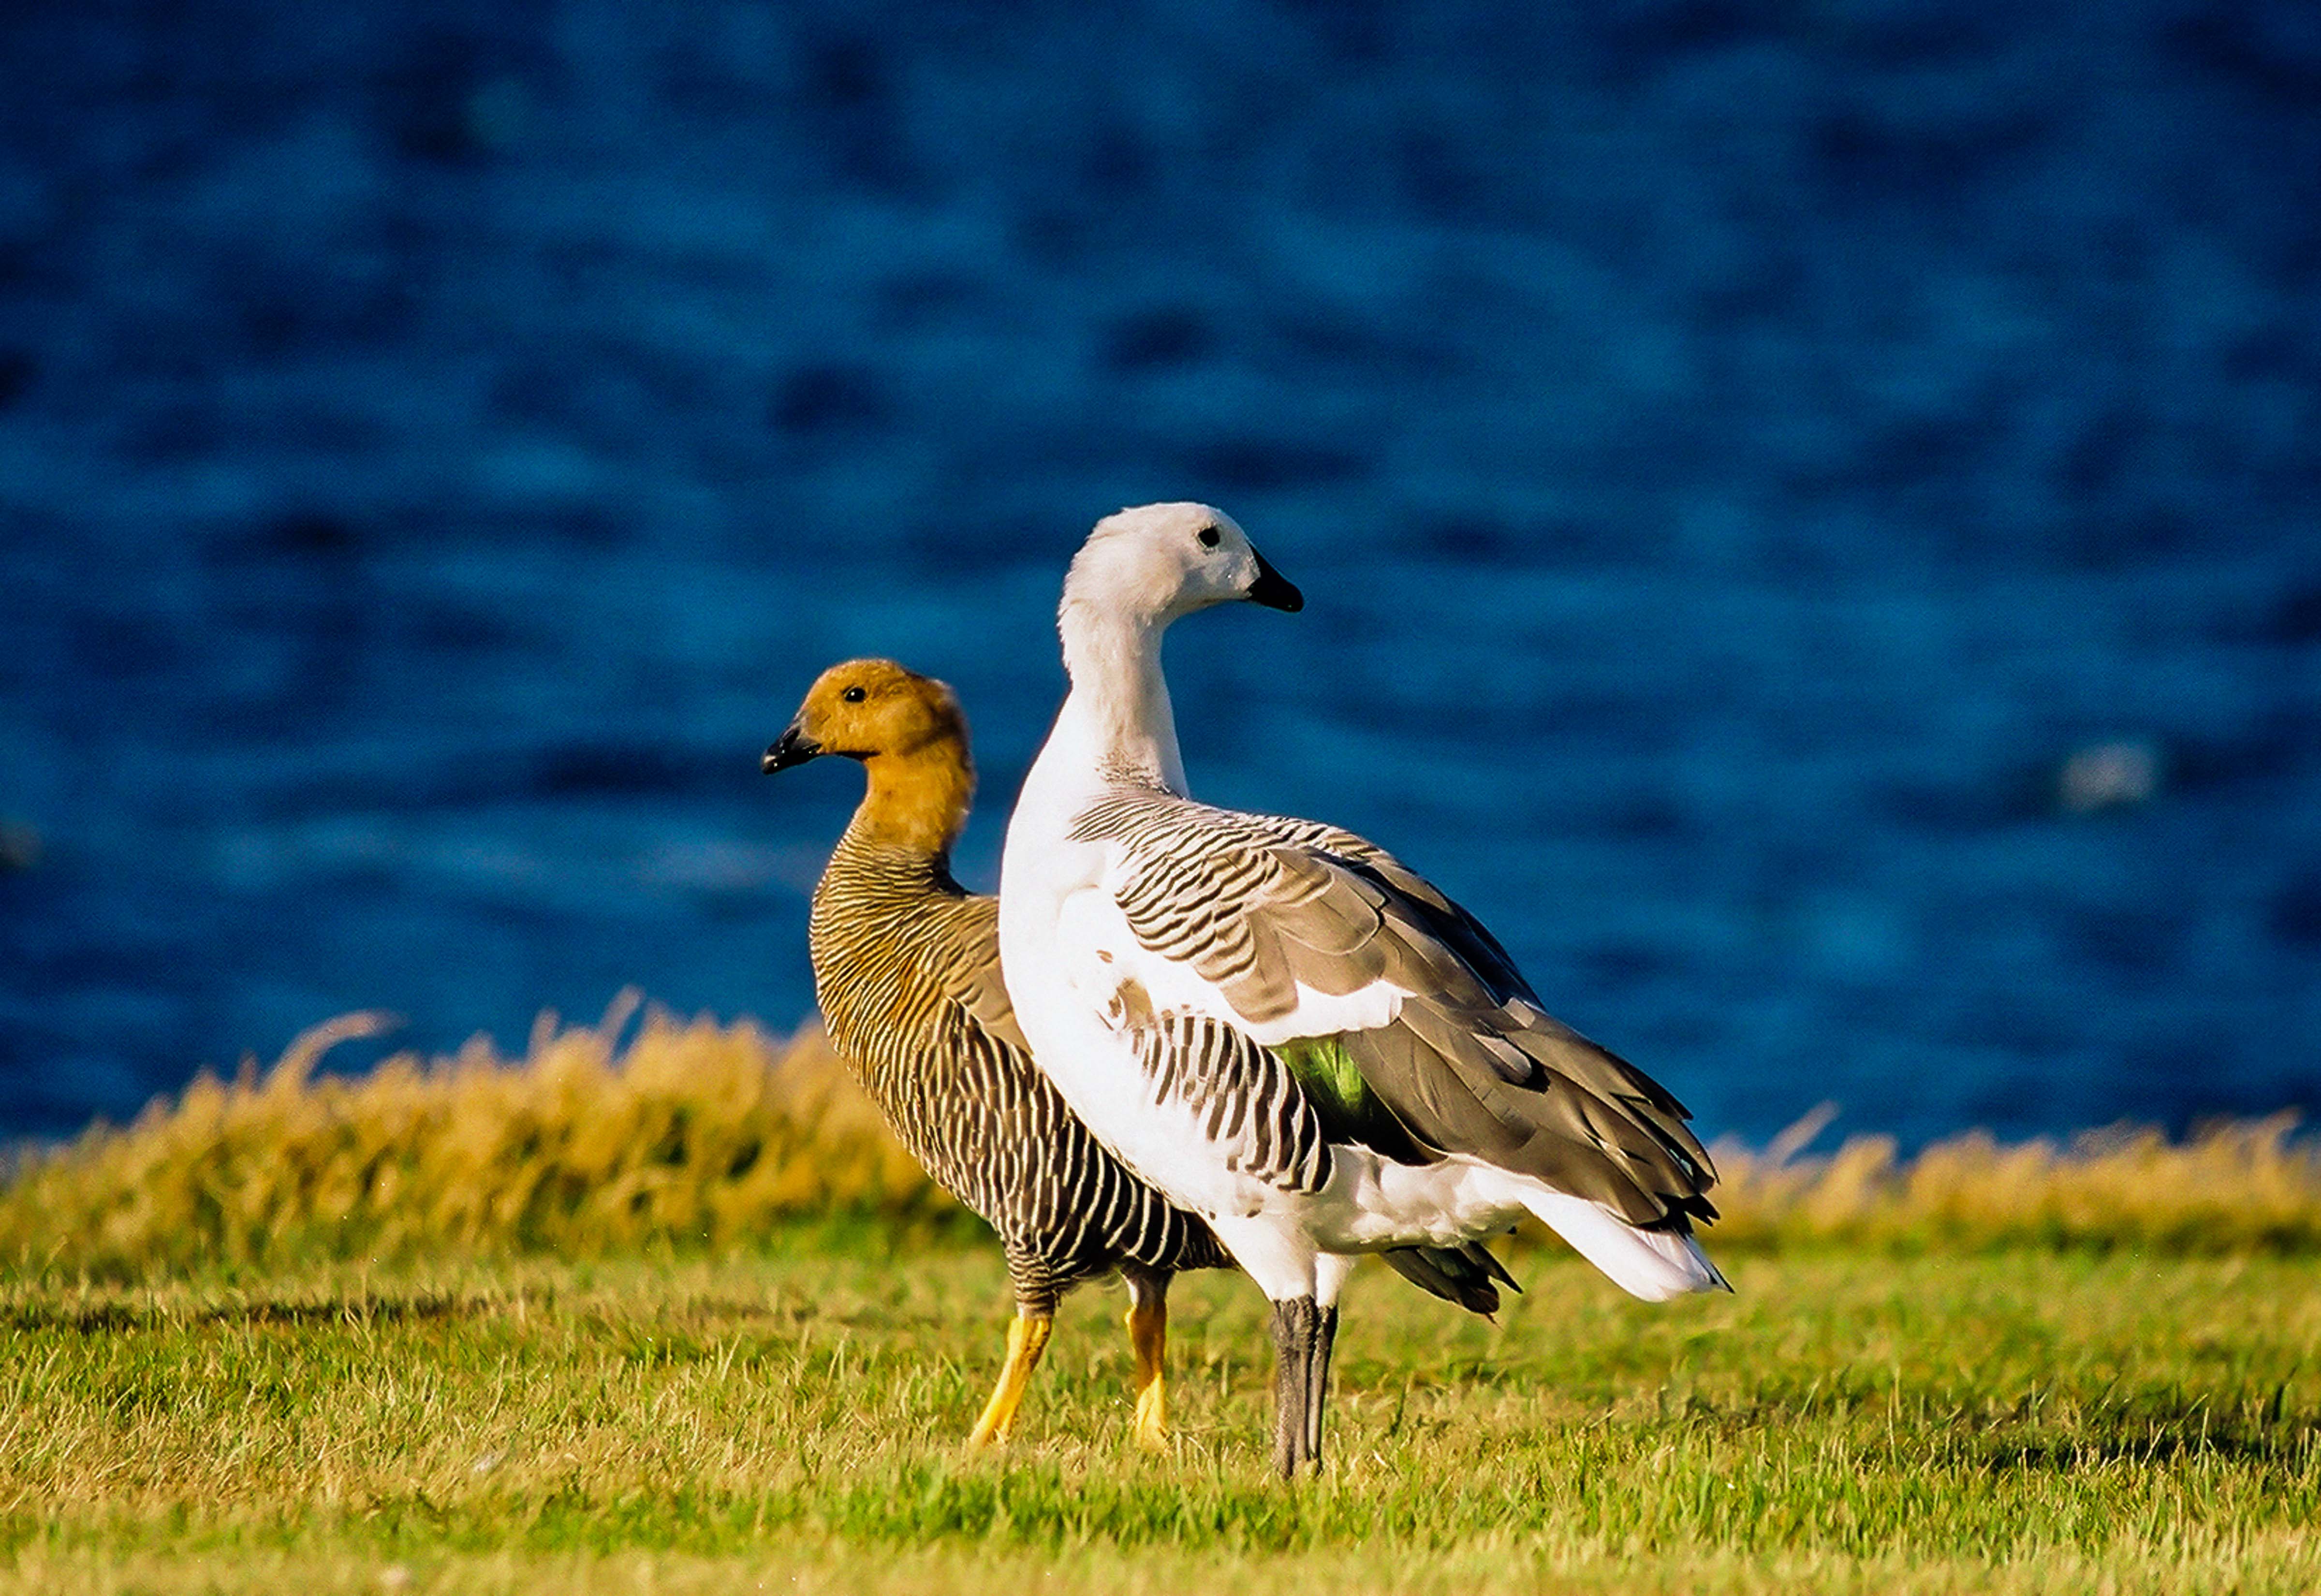 Falkland Is, Pheasant Pair, 2002